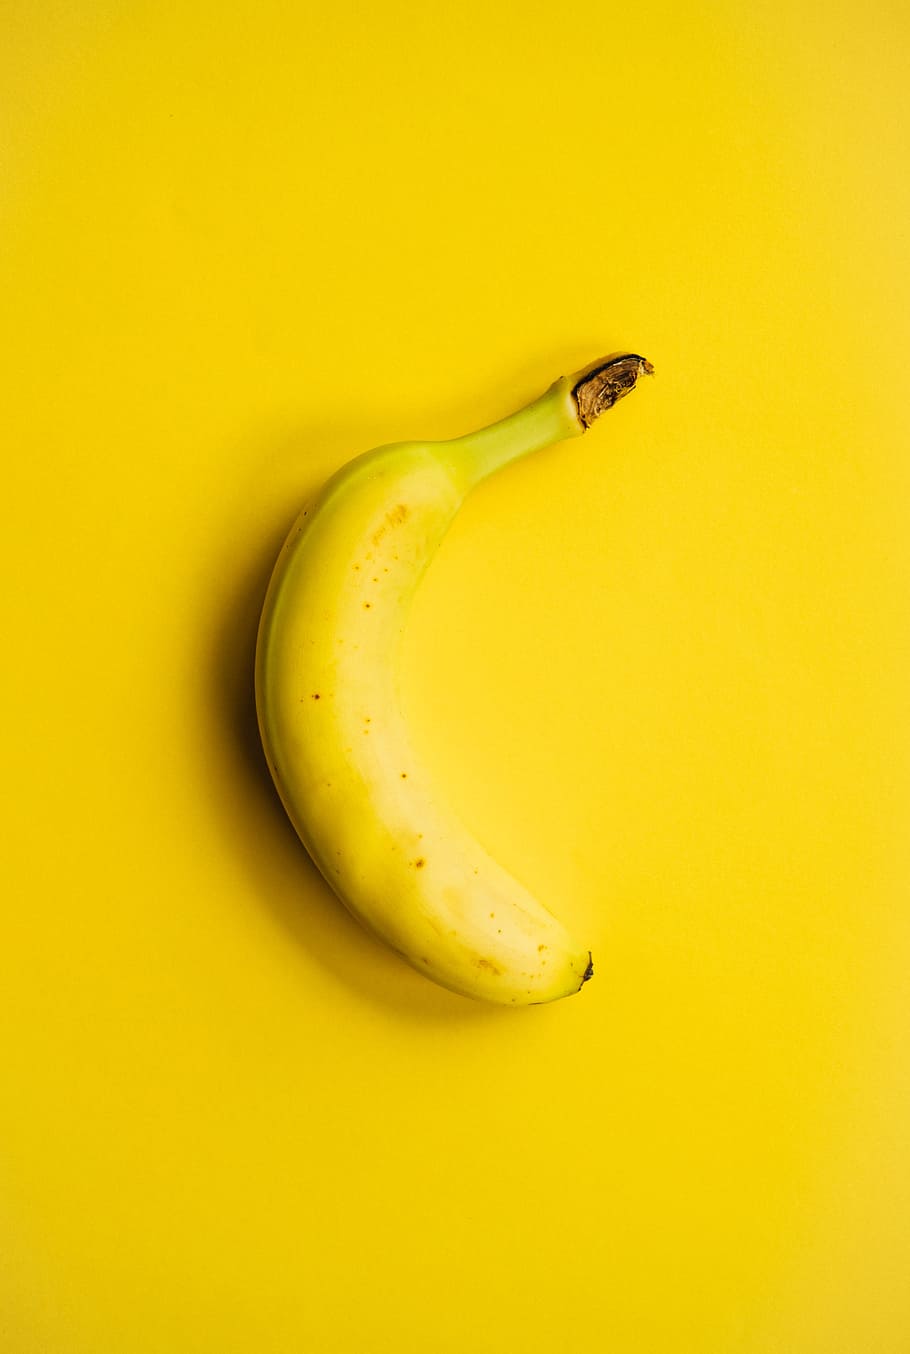 HD wallpaper: yellow banana fruit on yellow surface, yellow background,  unporn | Wallpaper Flare